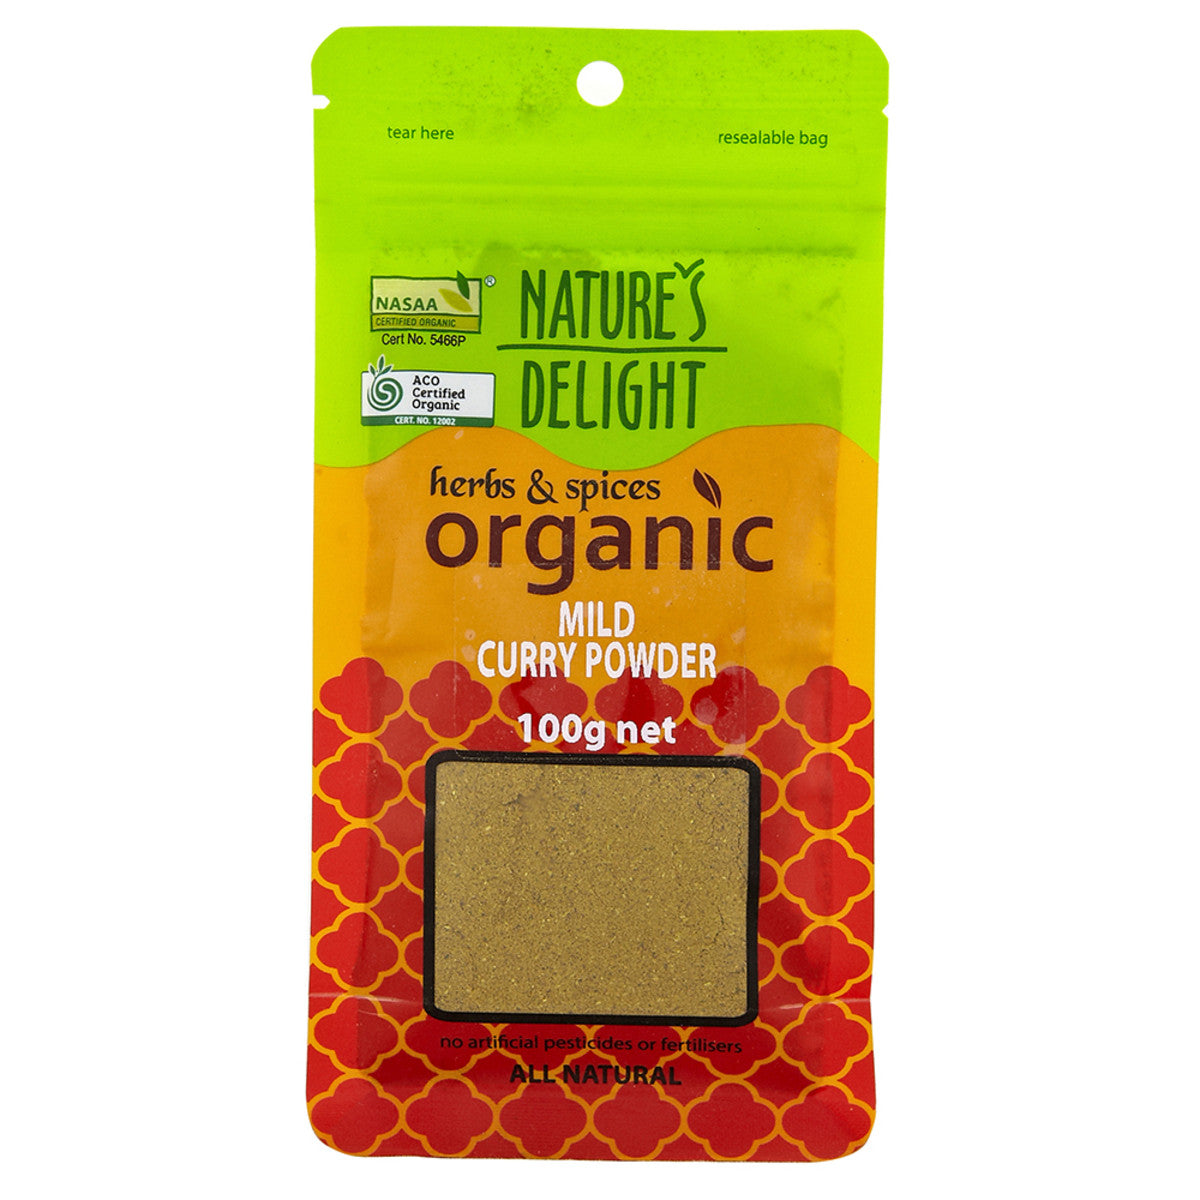 Natures Delight Organic - Mild Curry Powder